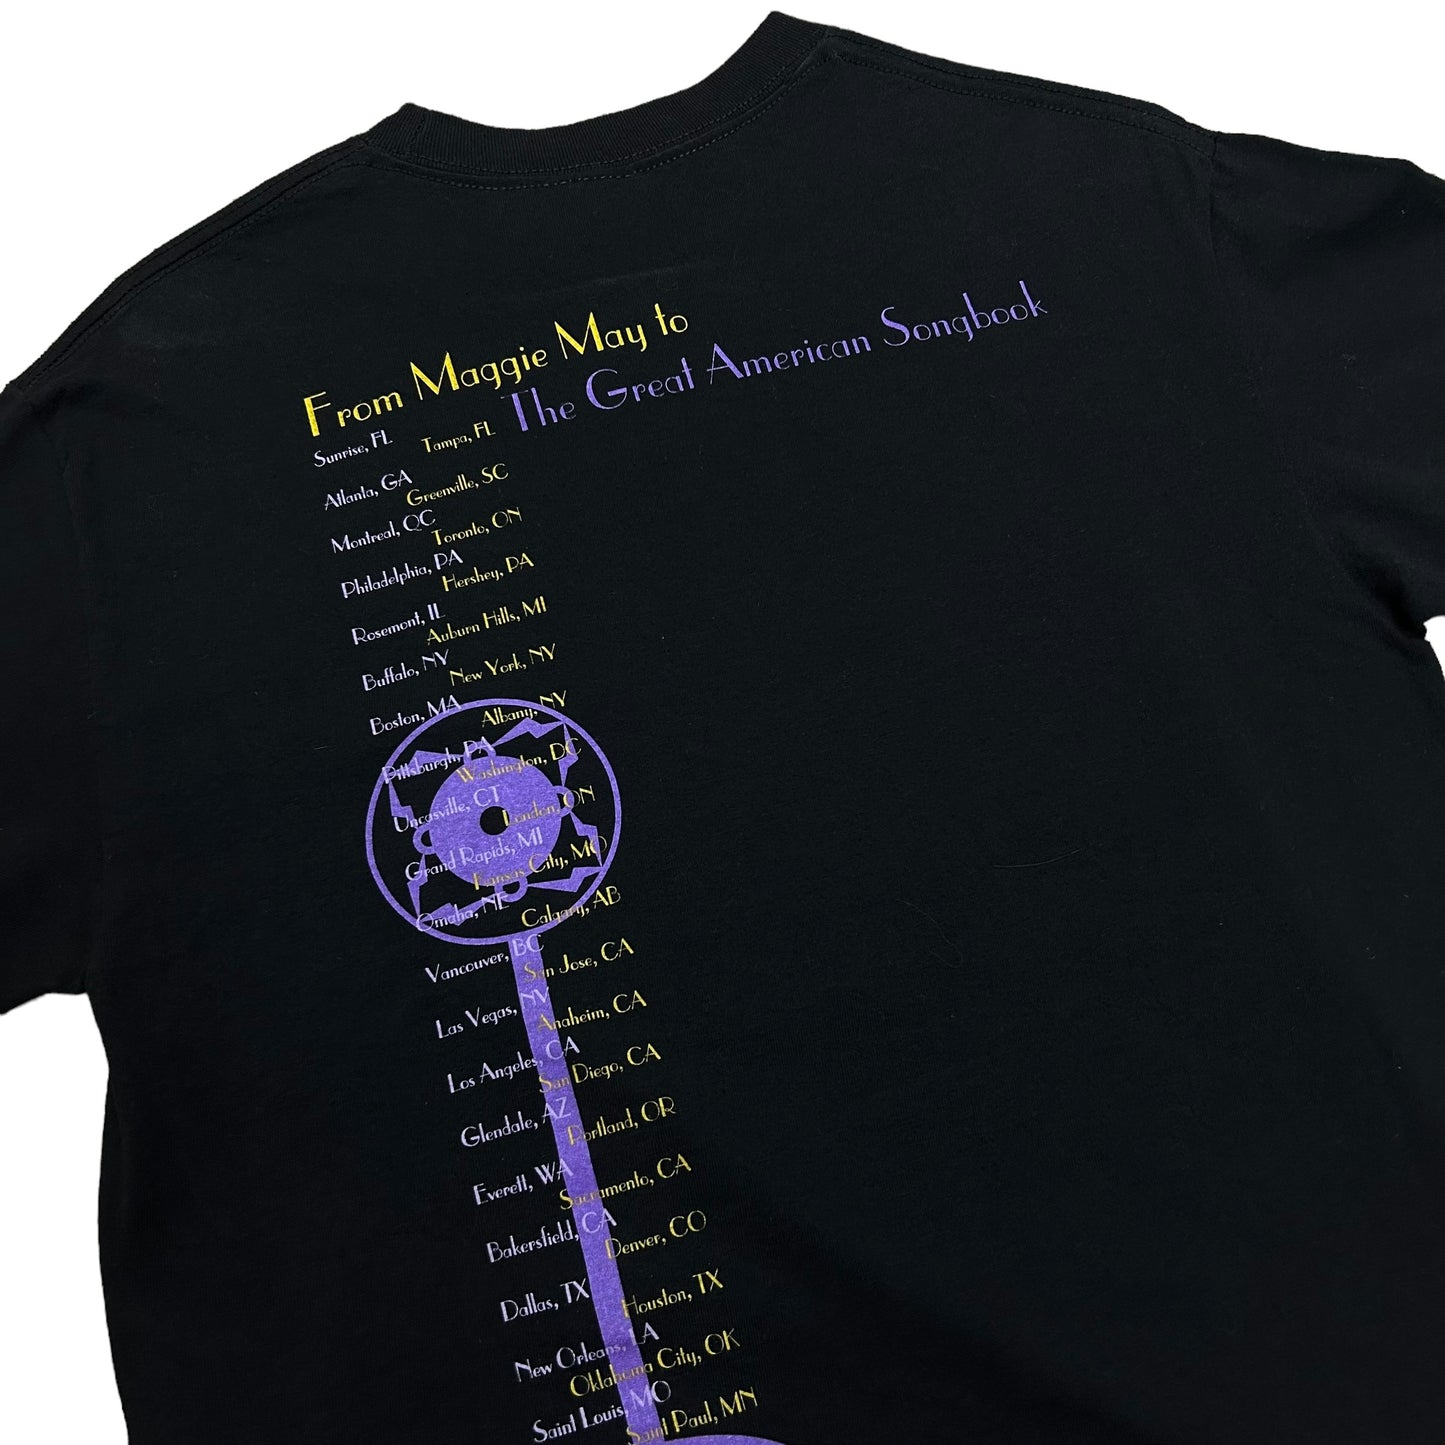 Early 2000s Rod Stewart Tour 2004 Black Graphic T-Shirt - Size Medium